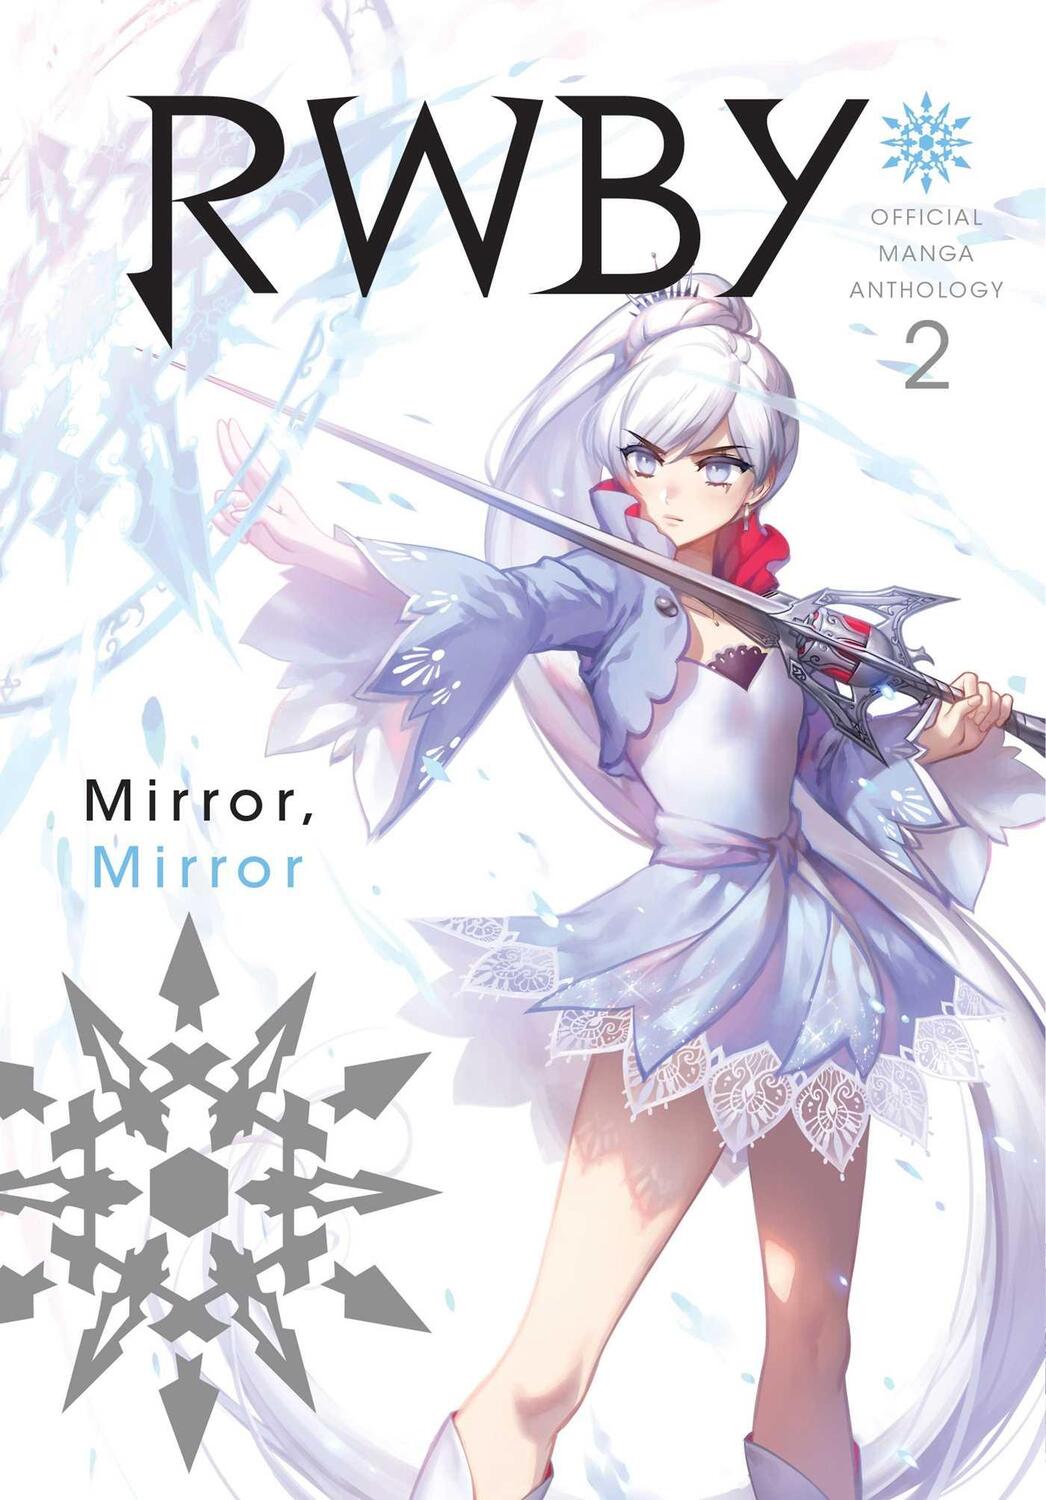 Cover: 9781974701582 | RWBY: Official Manga Anthology, Vol. 2 | MIRROR MIRROR | Monty Oum